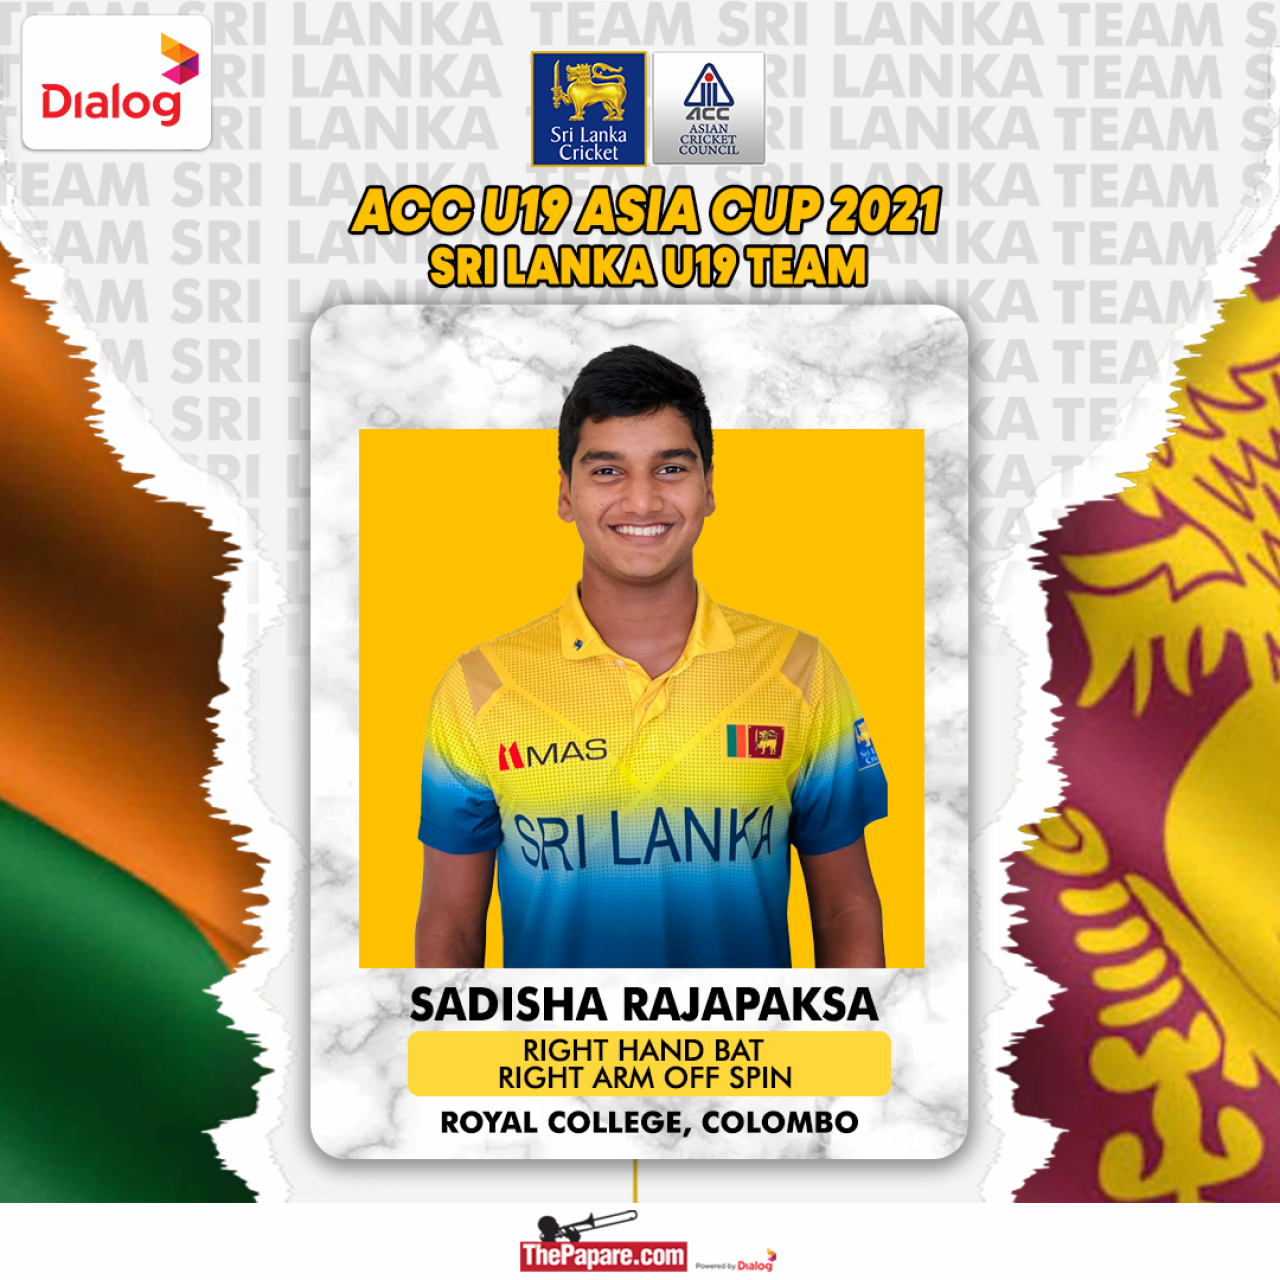 Photos - Sri Lanka U19 Team for ACC U19 Asia Cup 2021